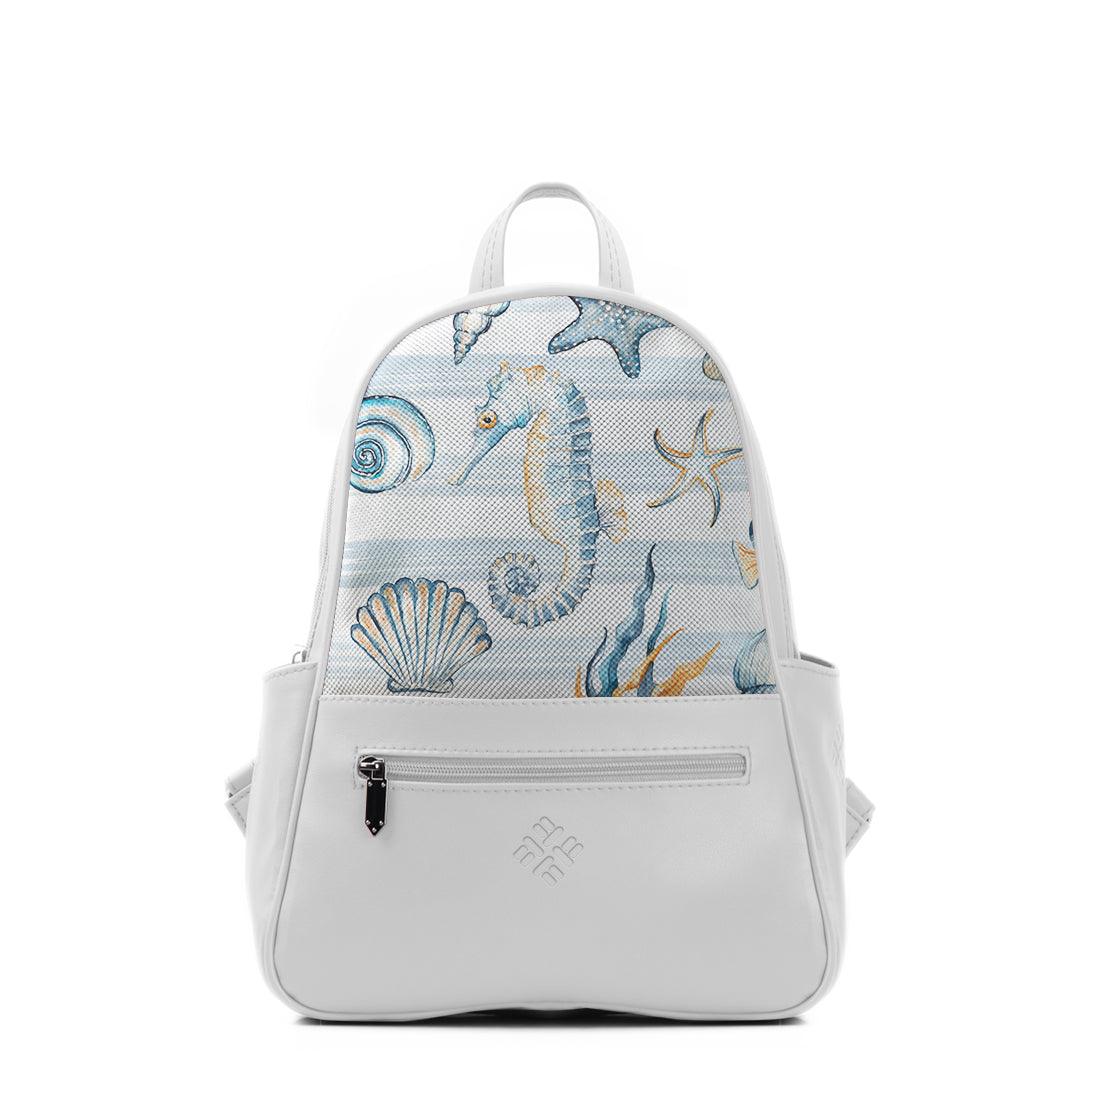 White Vivid Backpack Under Water